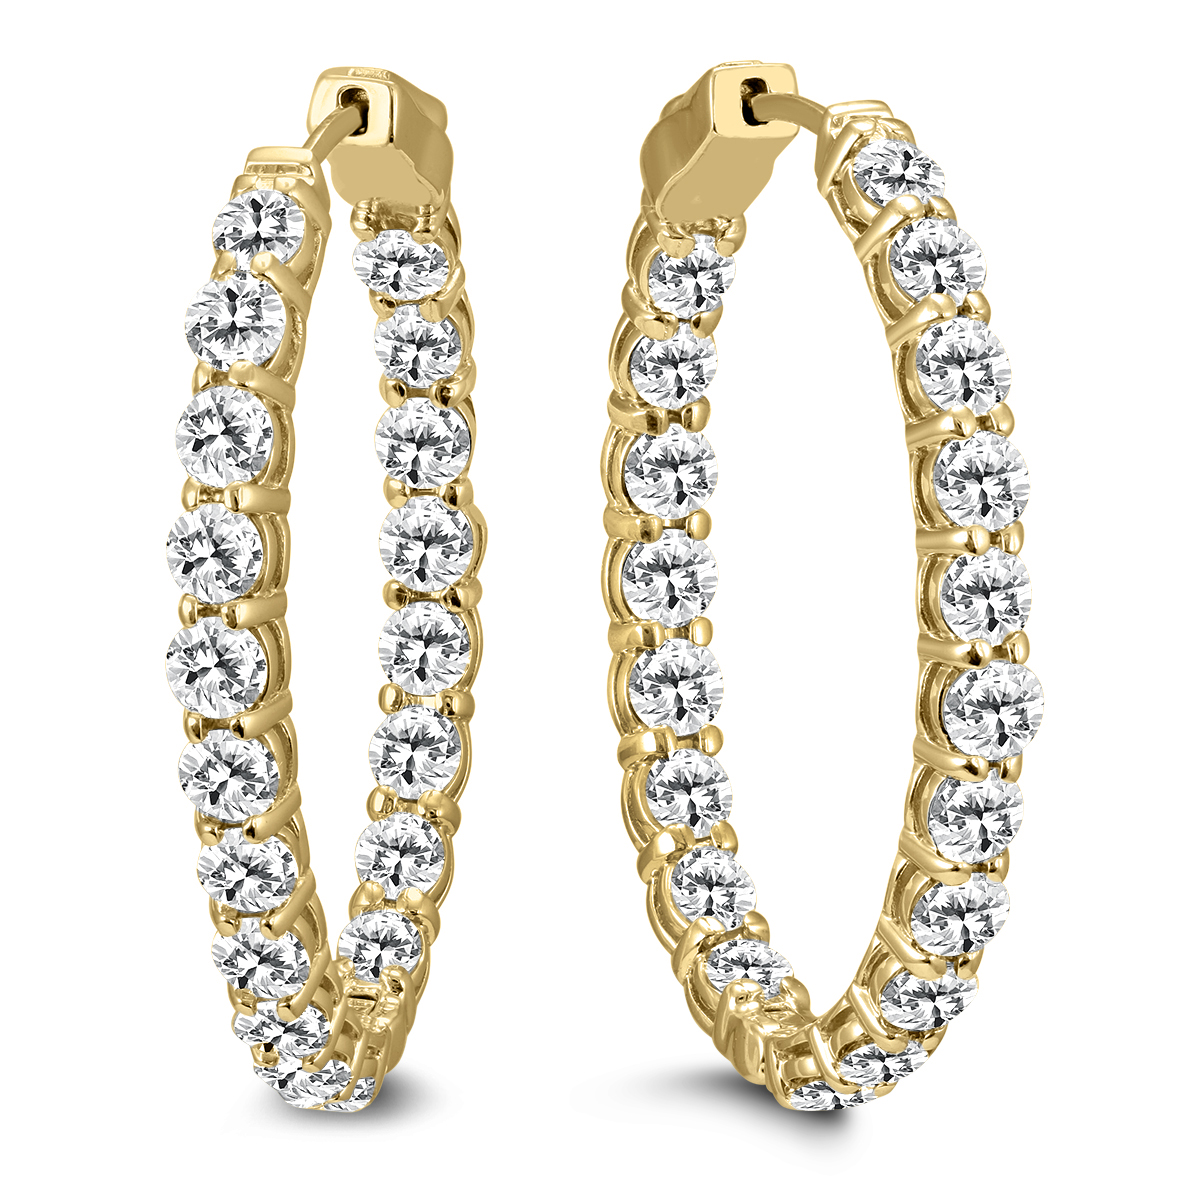 7 Carat TW Oval Diamond Hoop Earrings with Push Button Locks in 14K Yellow Gold